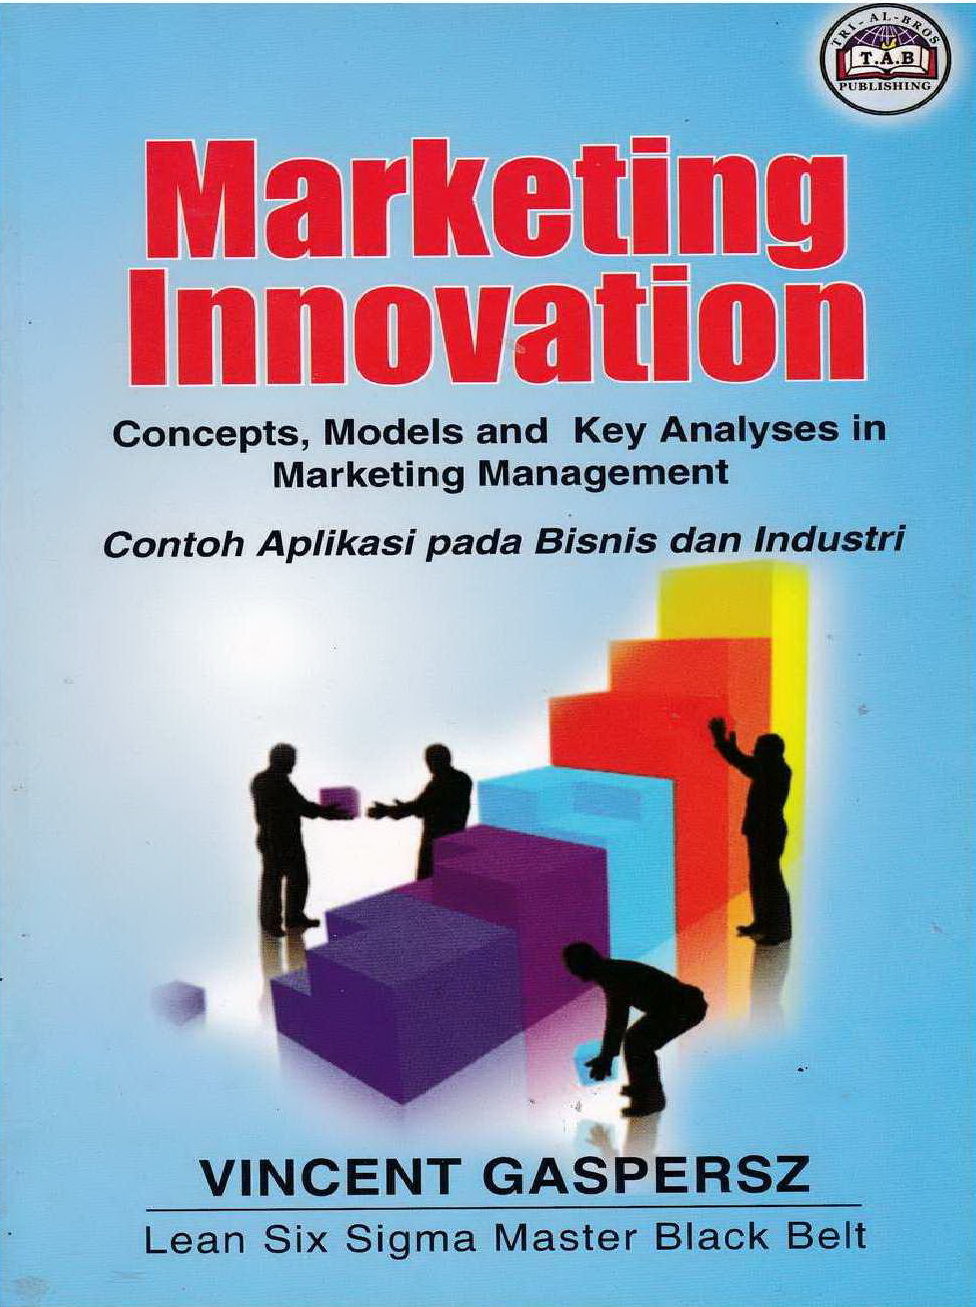 2002 Marketing Innovation Concepts, Models and Key Analyses in Marketing Management Contoh Aplikasi pada Bisnis dan Industri VG